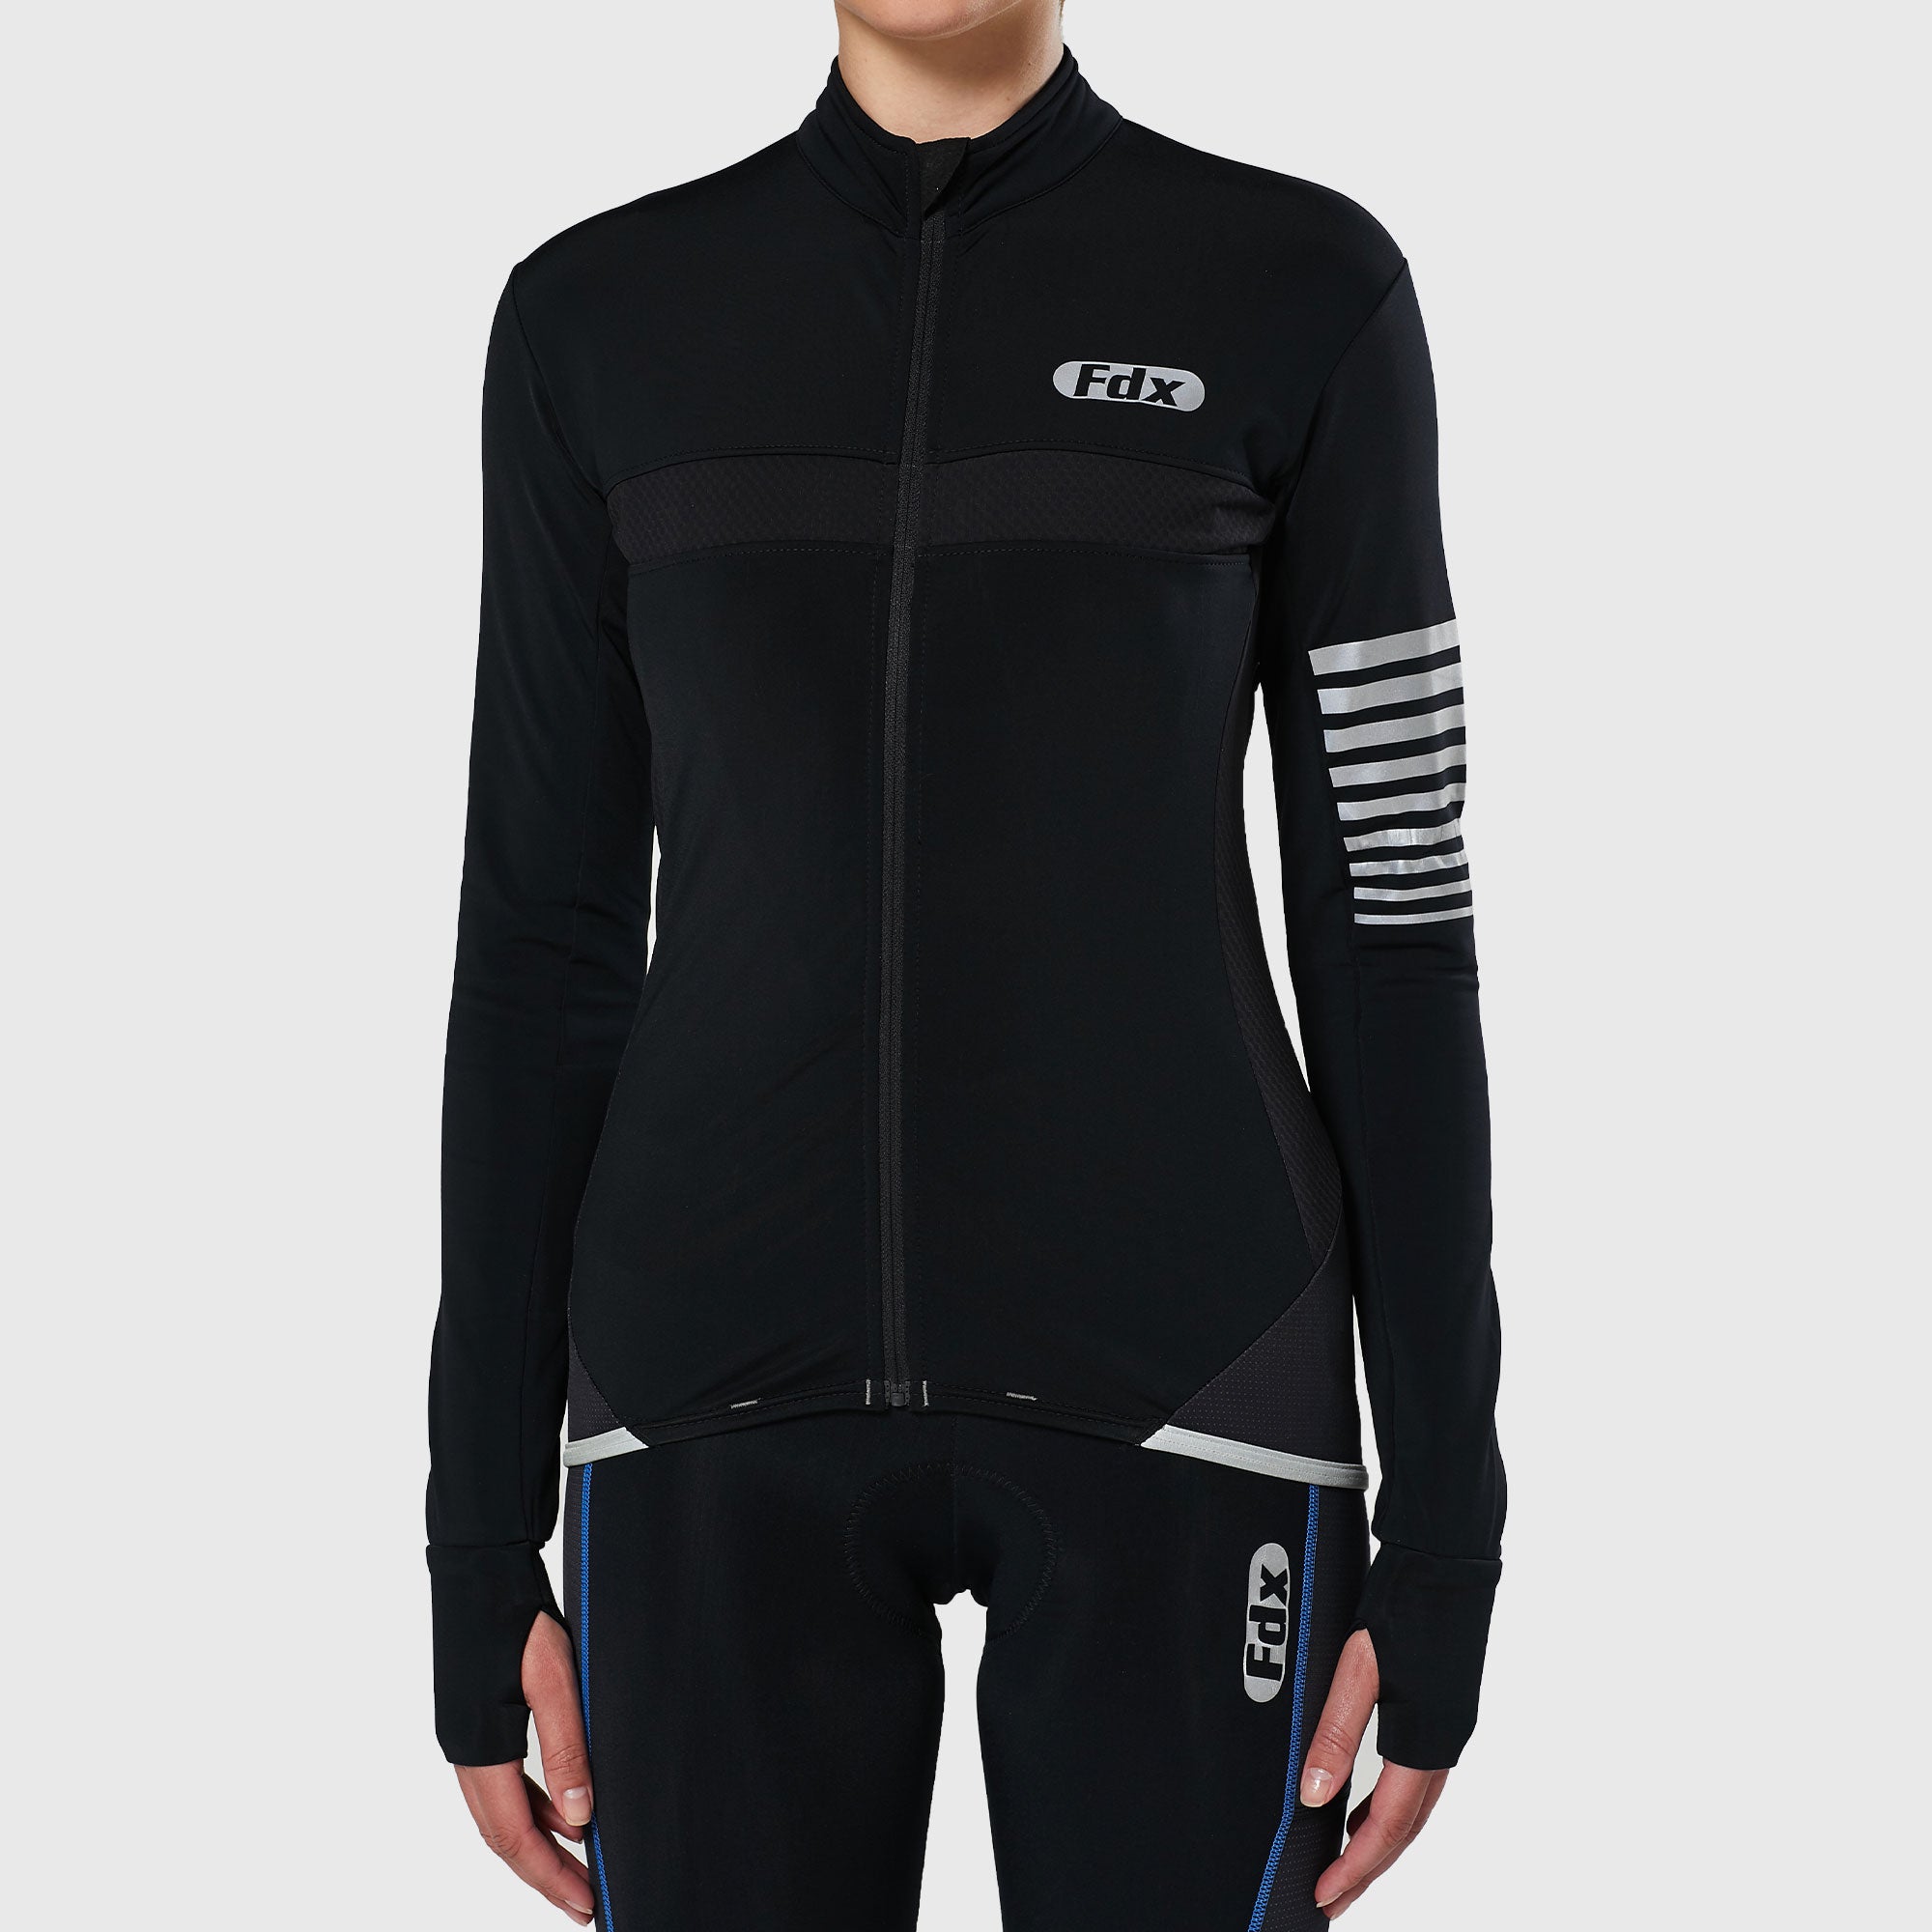 Fdx Best Women's Black Long Sleeve Cycling Jersey for Winter Roubaix Thermal Fleece Shirt Road Bike Wear Top Full Zipper, Lightweight  Pockets & Hi viz Reflectors - All Day